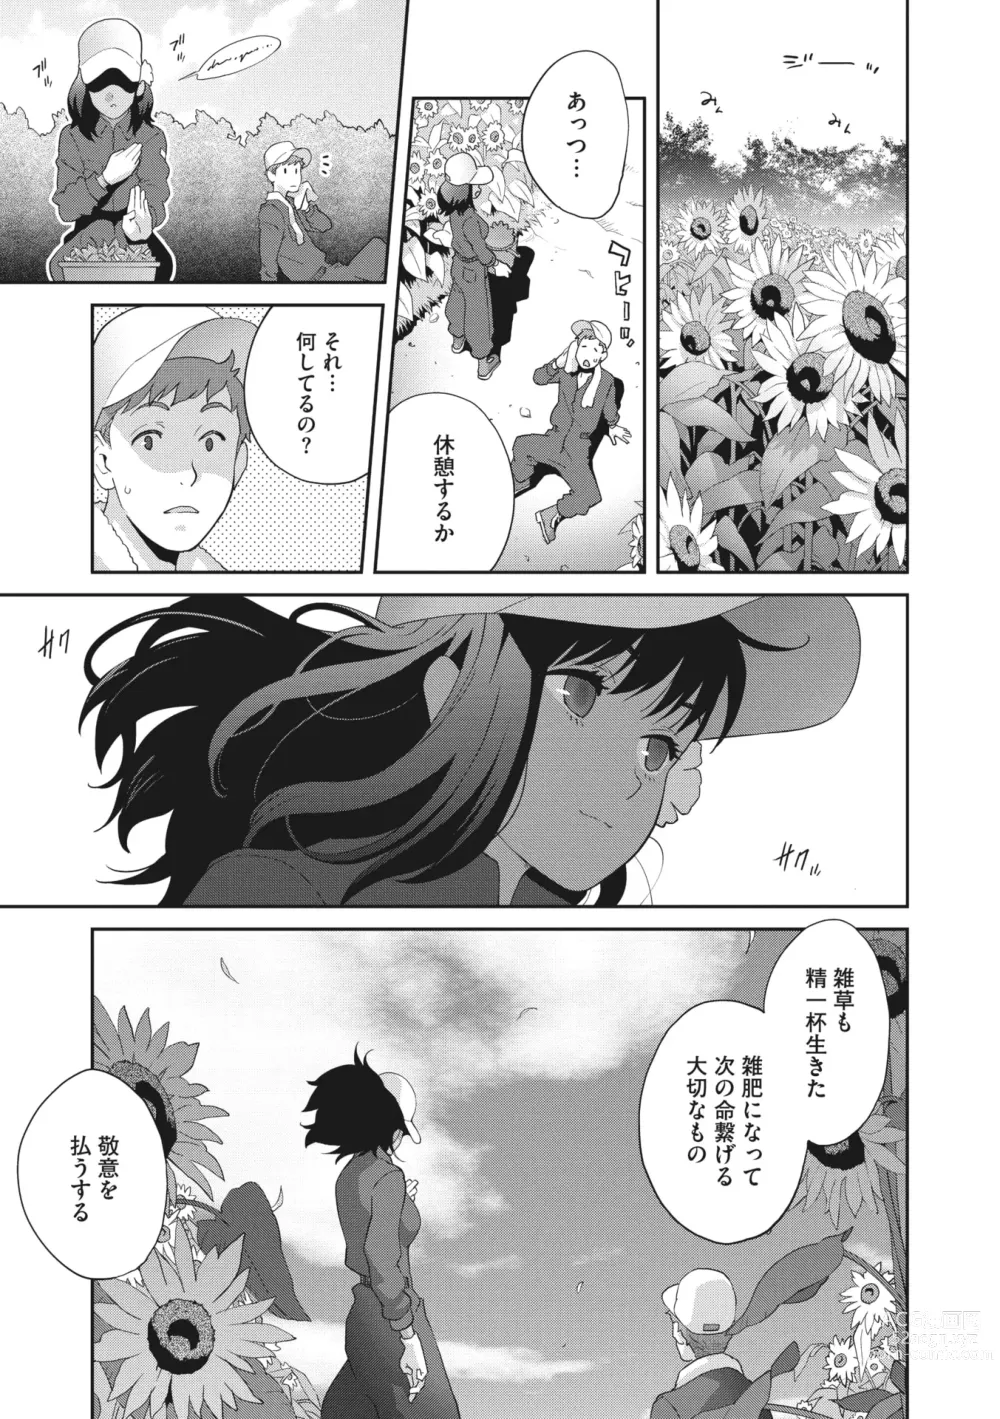 Page 7 of manga Kimama Tawawa Manana 1-4